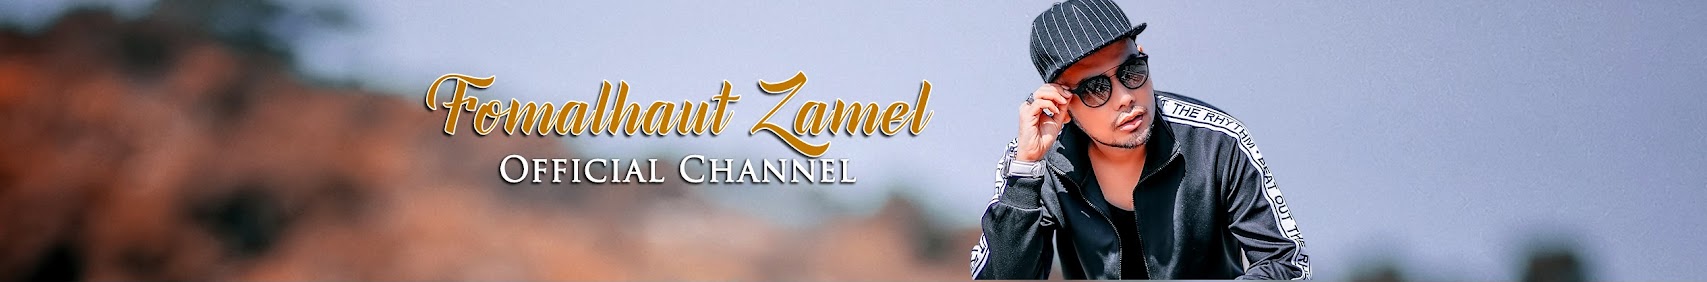 Fomalhaut Zamel